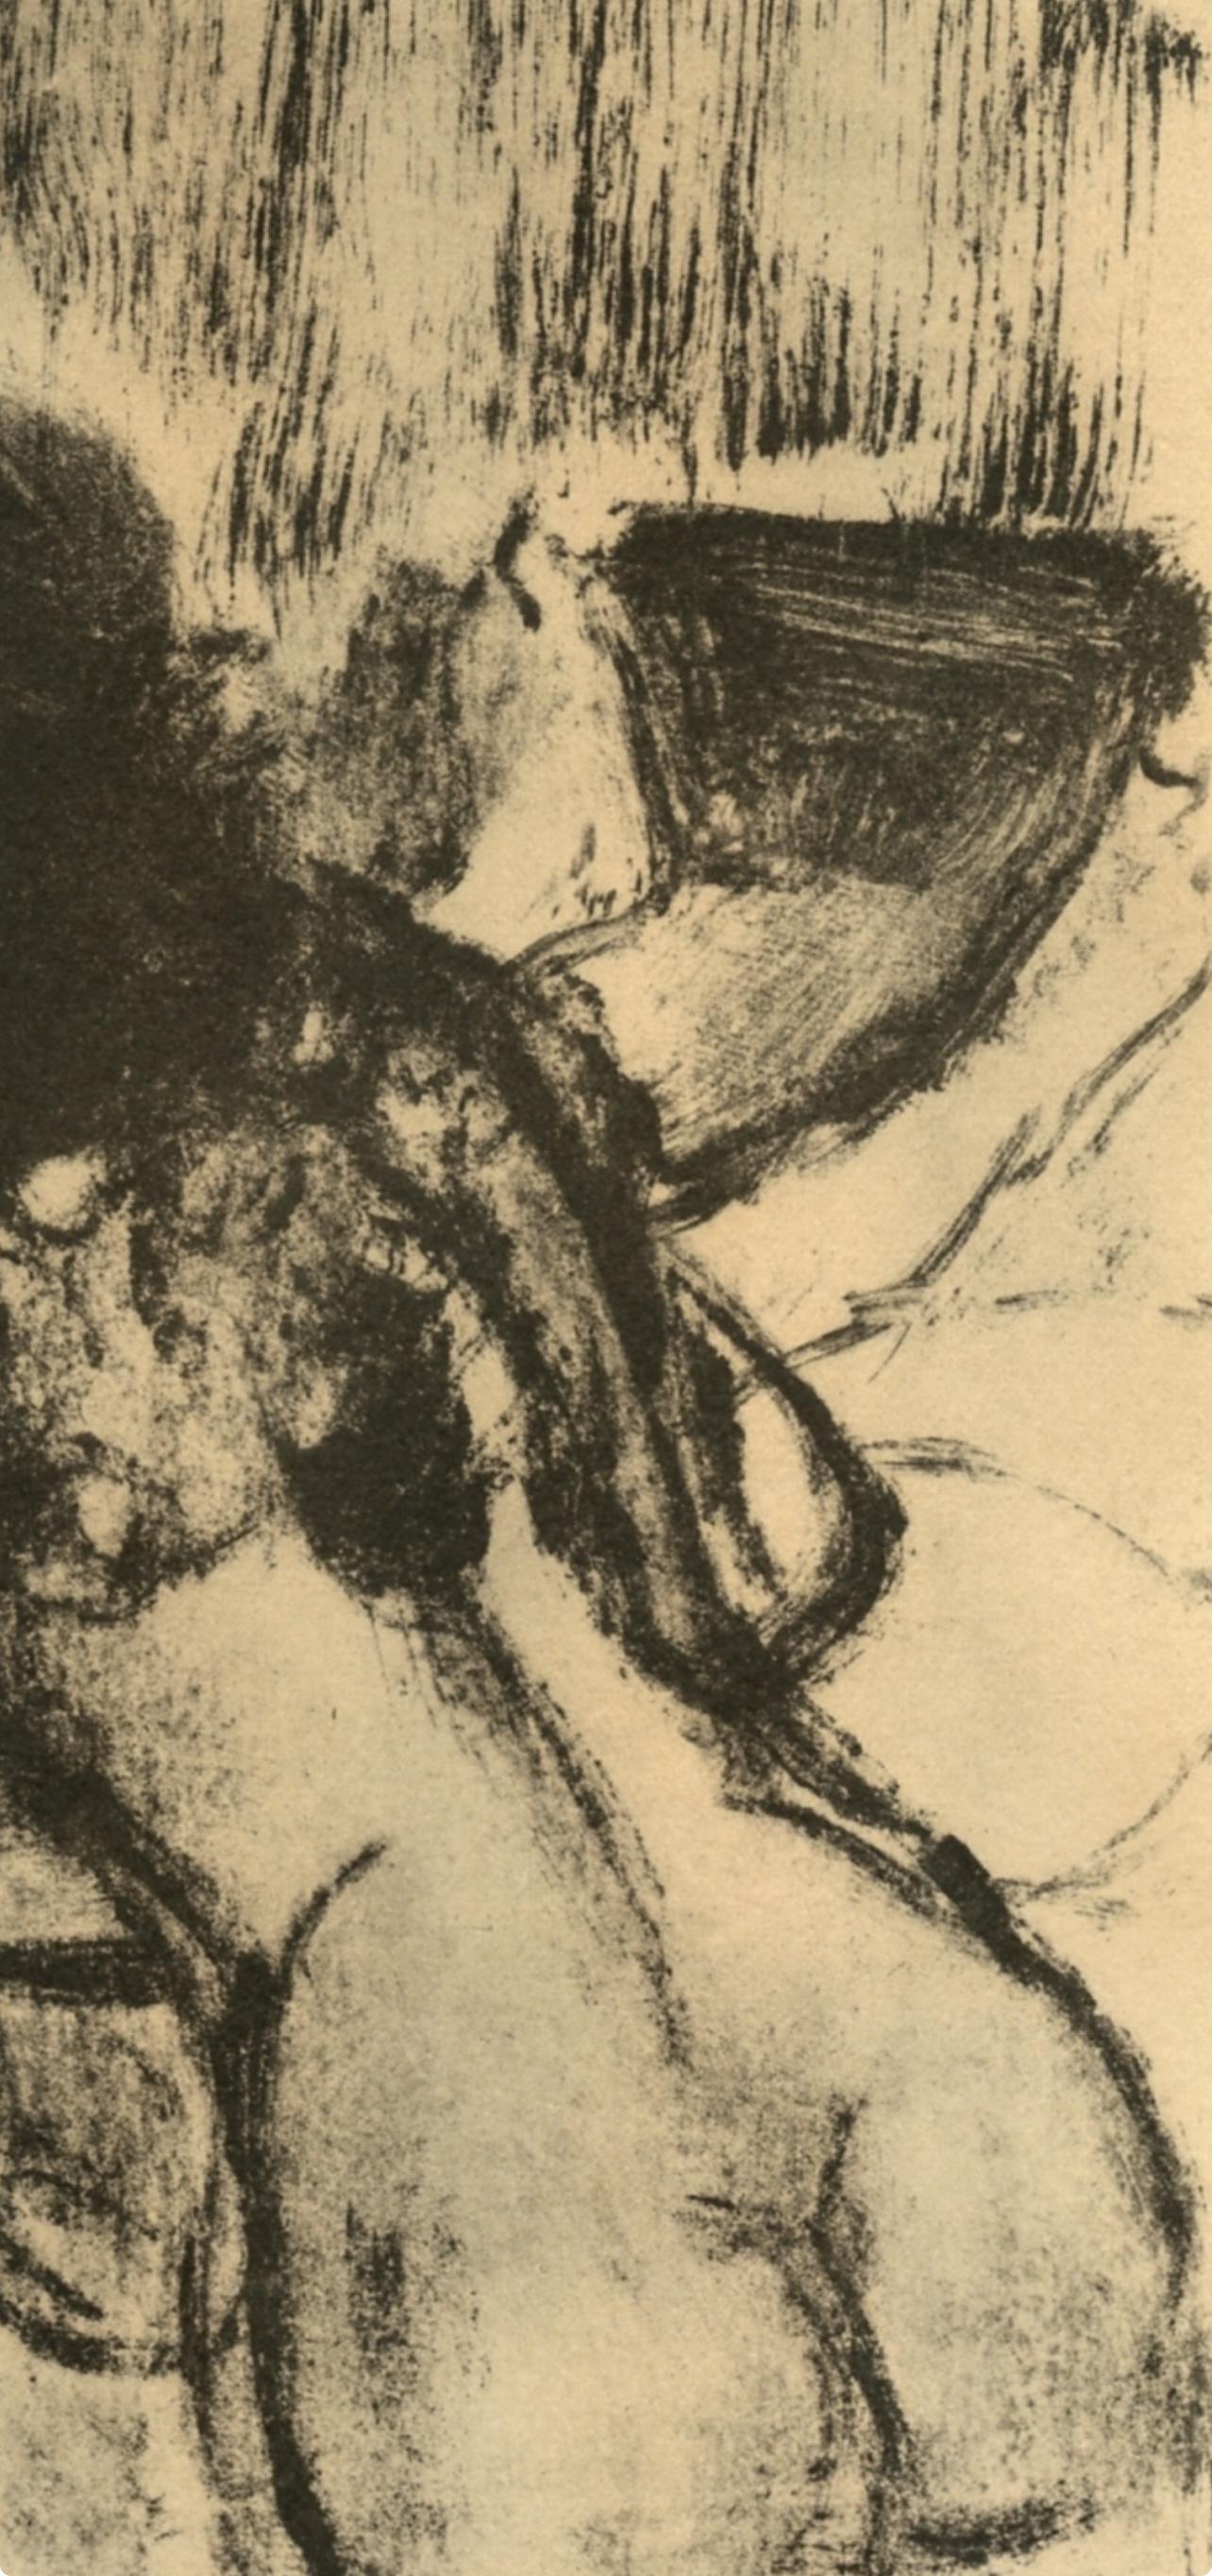 Degas, Conversation, Les Monotypes (after) - Impressionist Print by Edgar Degas